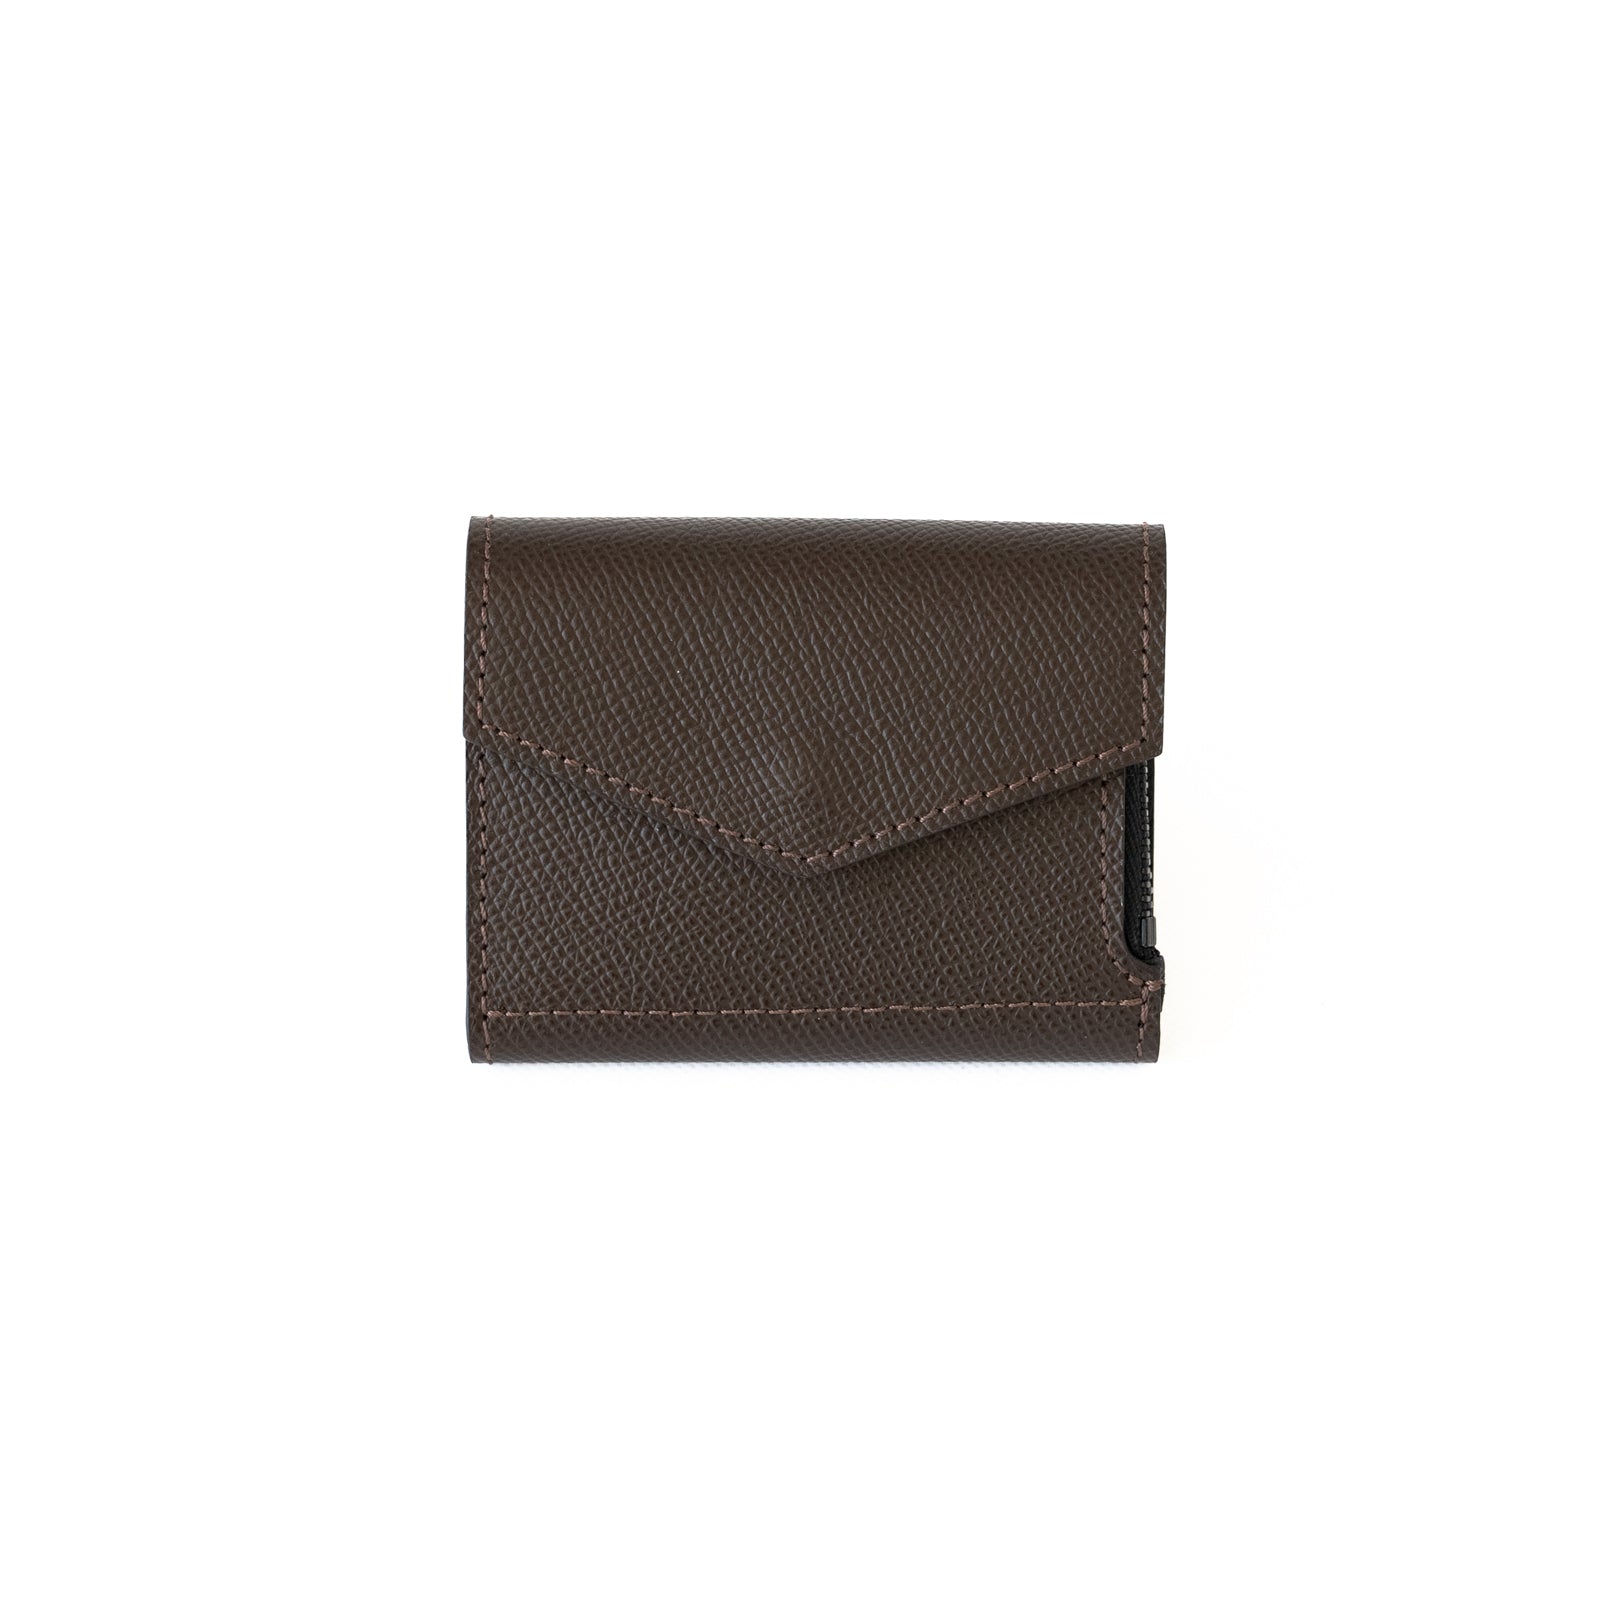 Handy Wallet Opera Epsom Leather / Chocolate